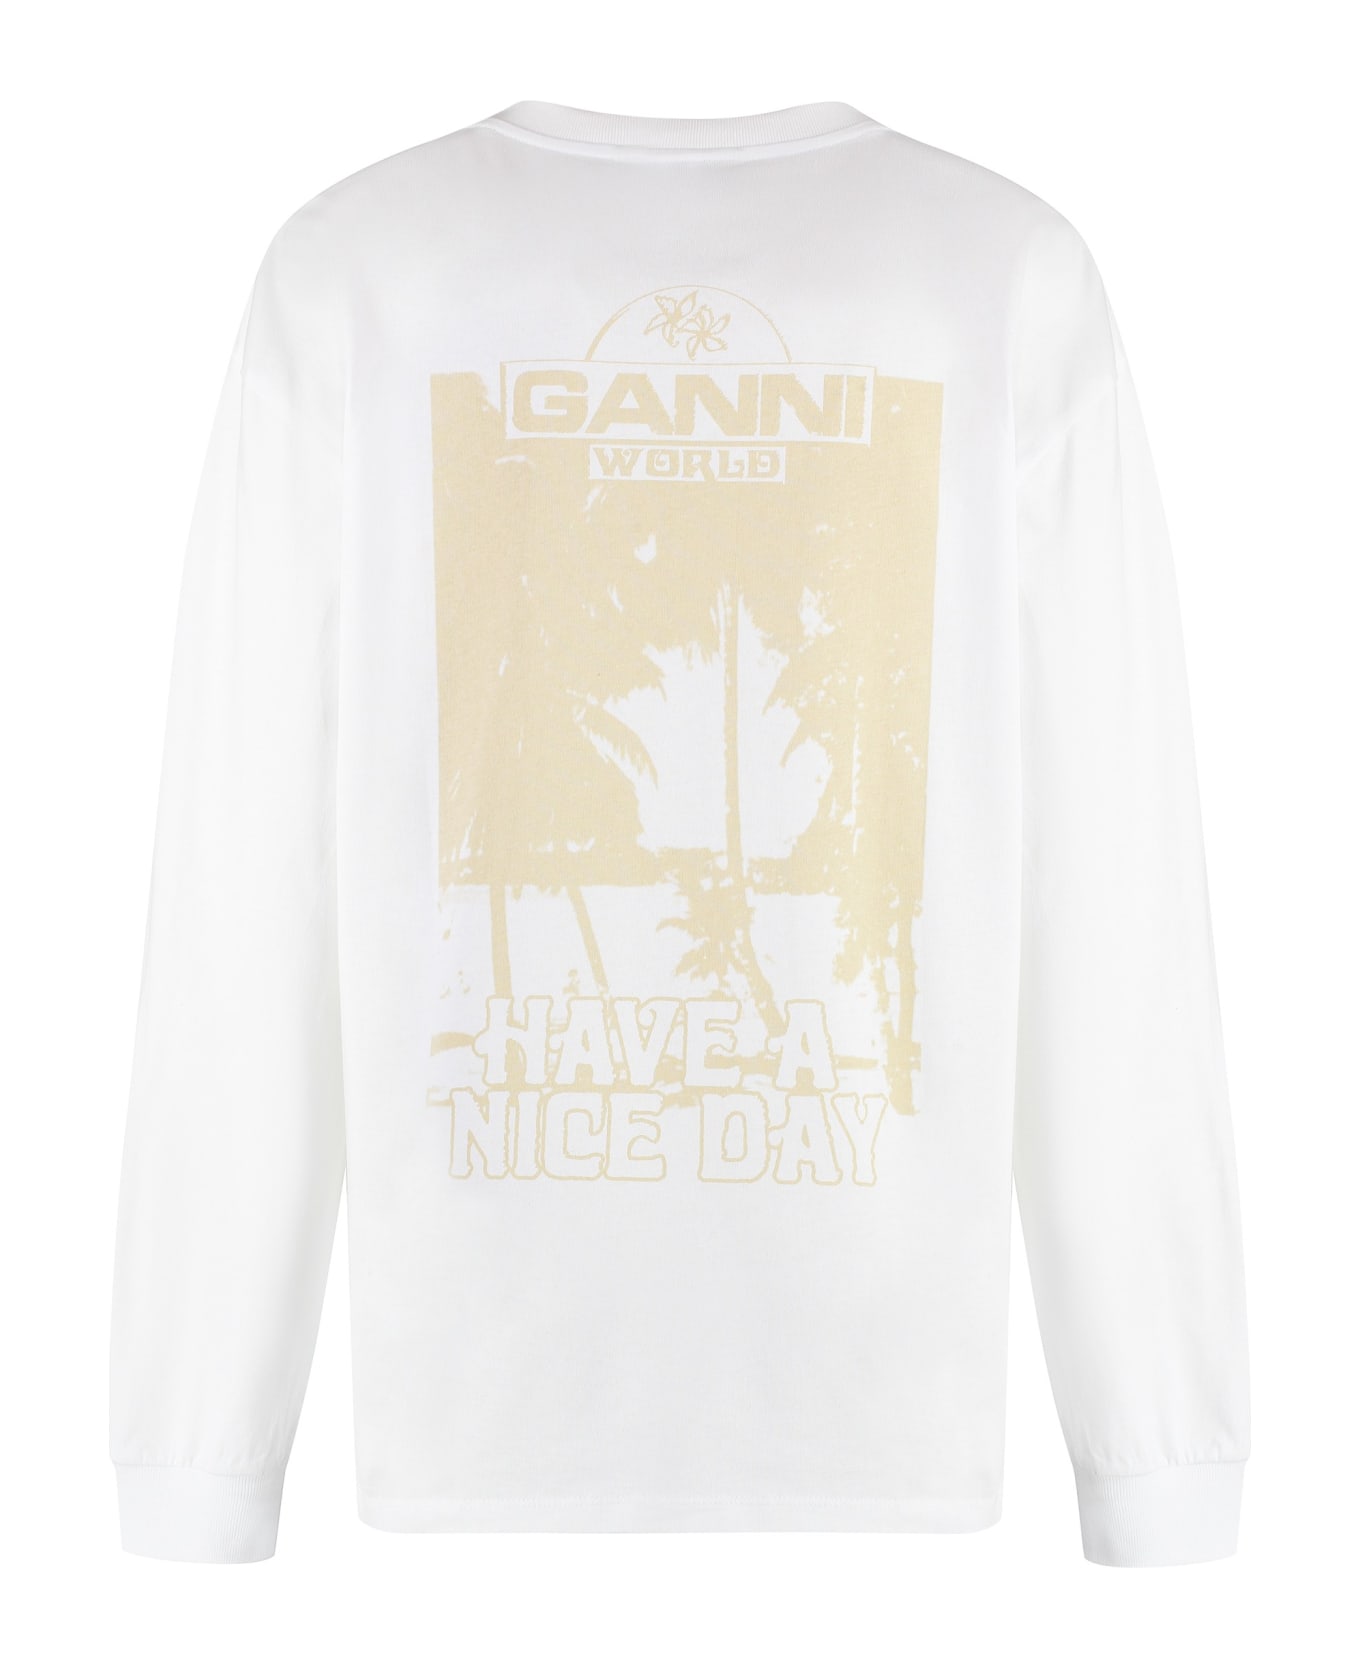 Ganni Long Sleeve Cotton T-shirt - White